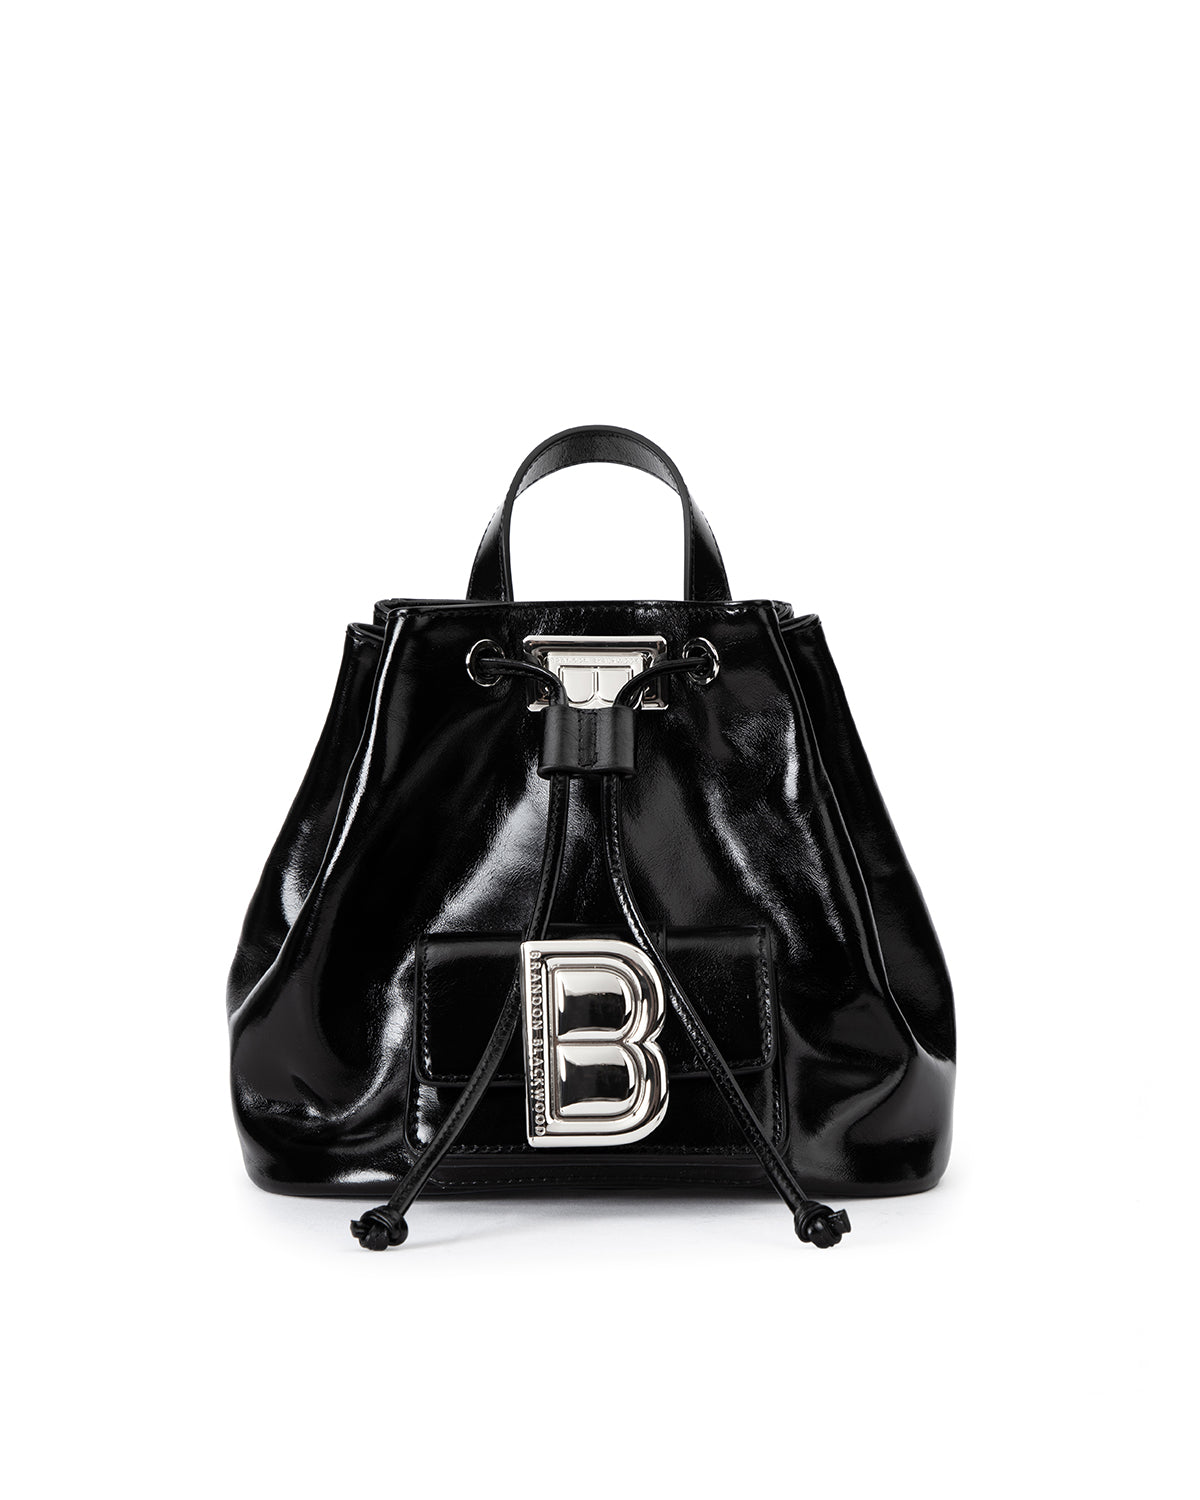 Brandon Blackwood New York - Midori Bag - Black Oil Leather w/ Silver